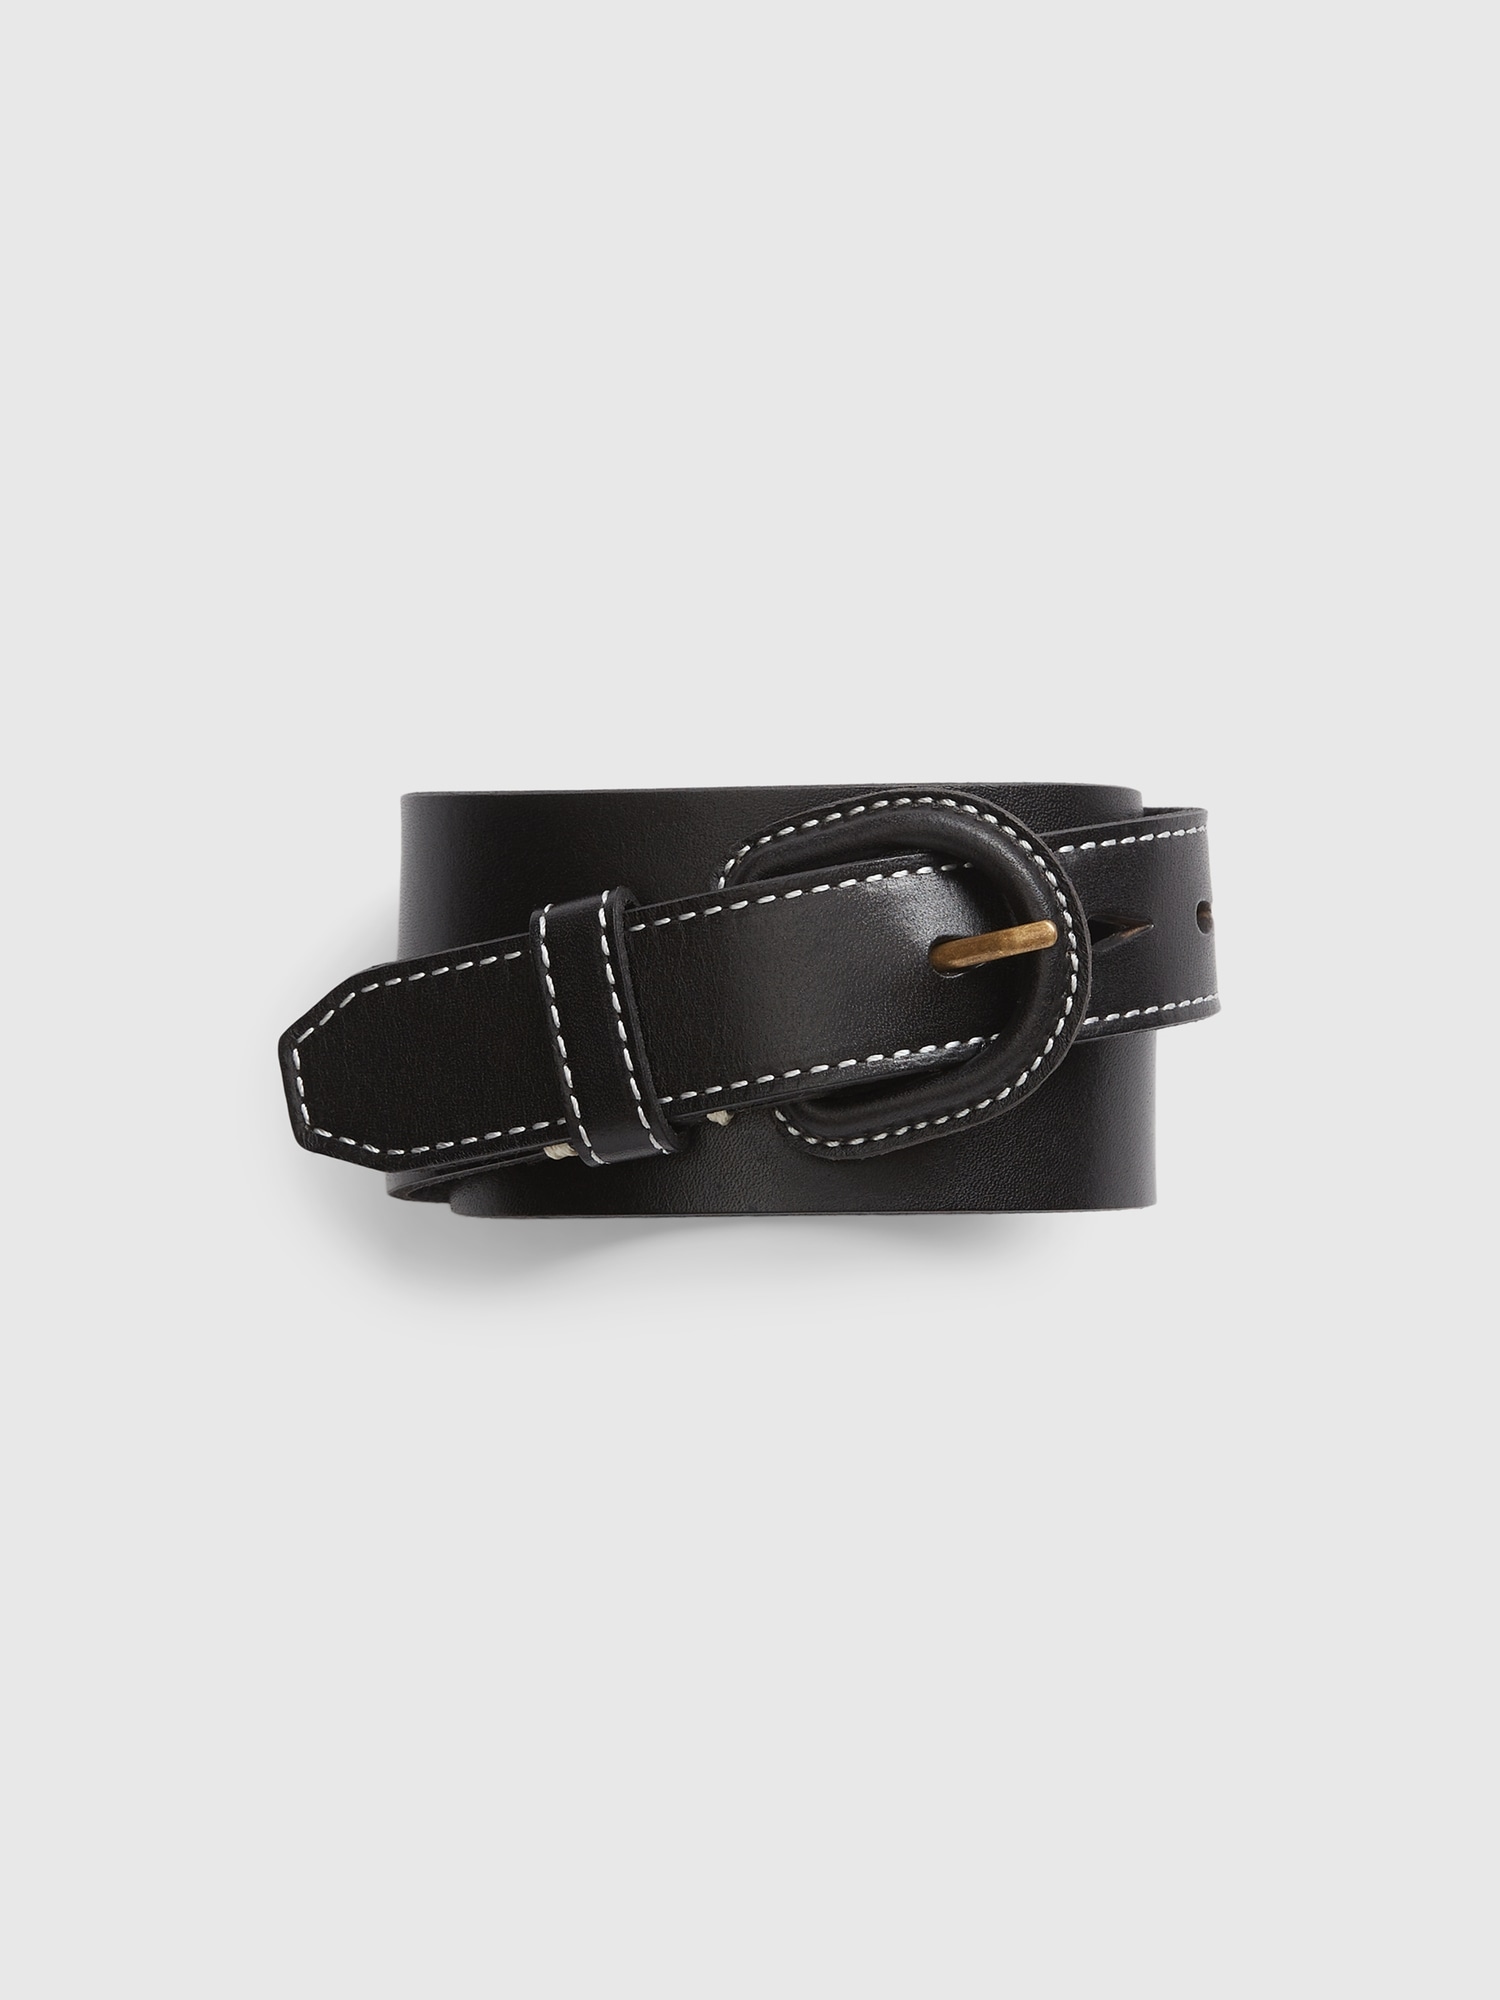 Gap Contrast Stitch Leather Belt black. 1